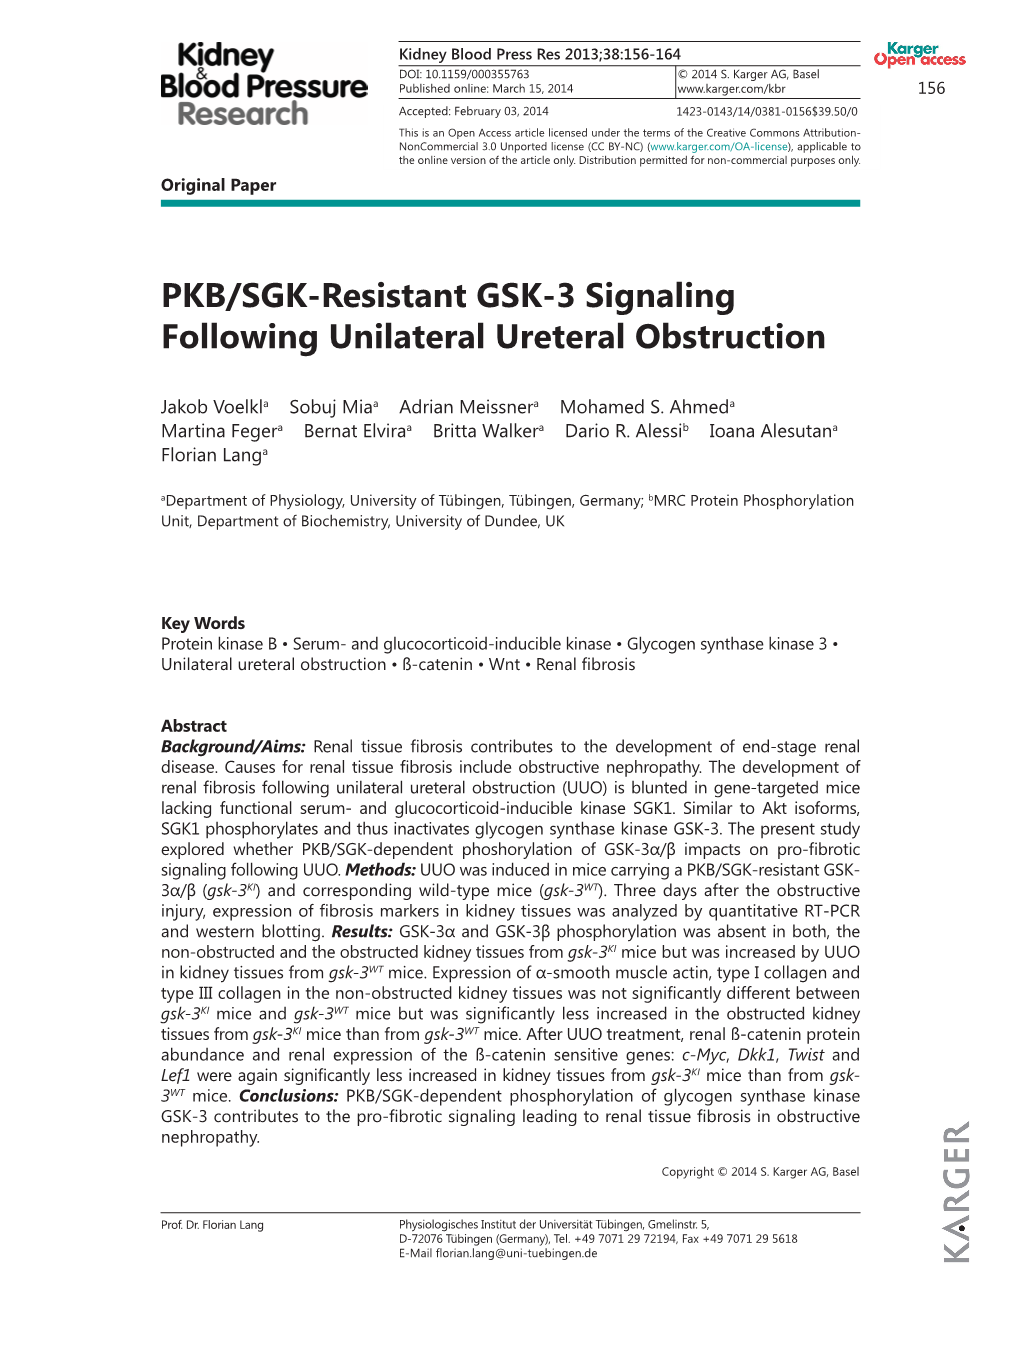 PKB/SGK-Resistant GSK-3 Signaling Following Unilateral Ureteral Obstruction